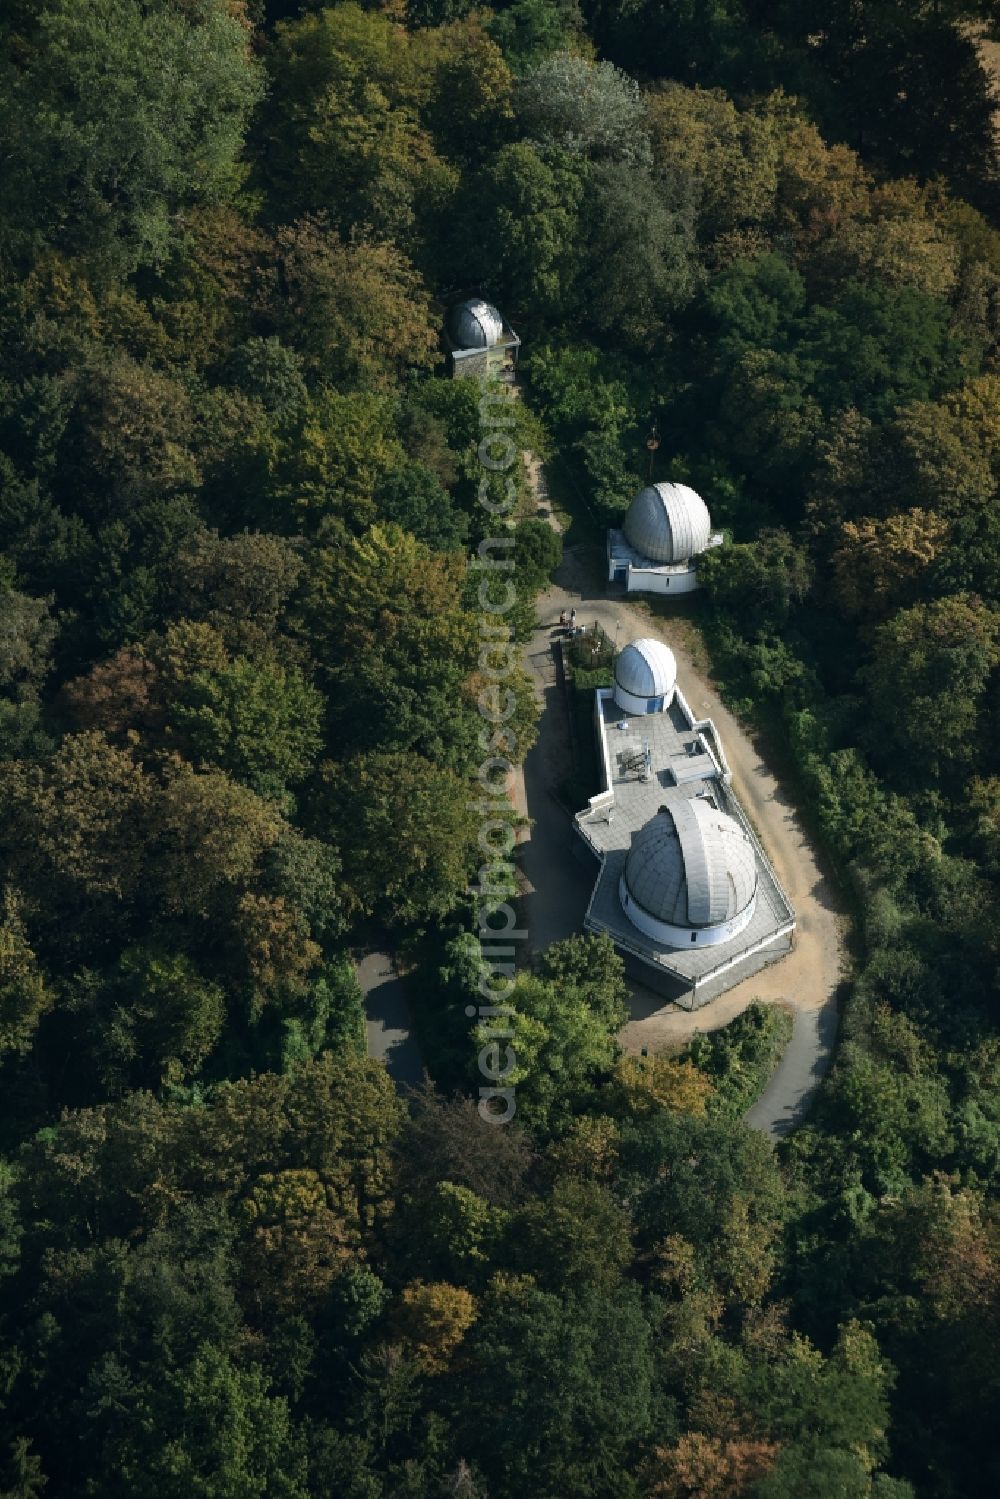 Aerial image Berlin - Observatory Wilhelm-Foerster-Sternwarte on Insulaner hill in the Schoeneberg part of Berlin